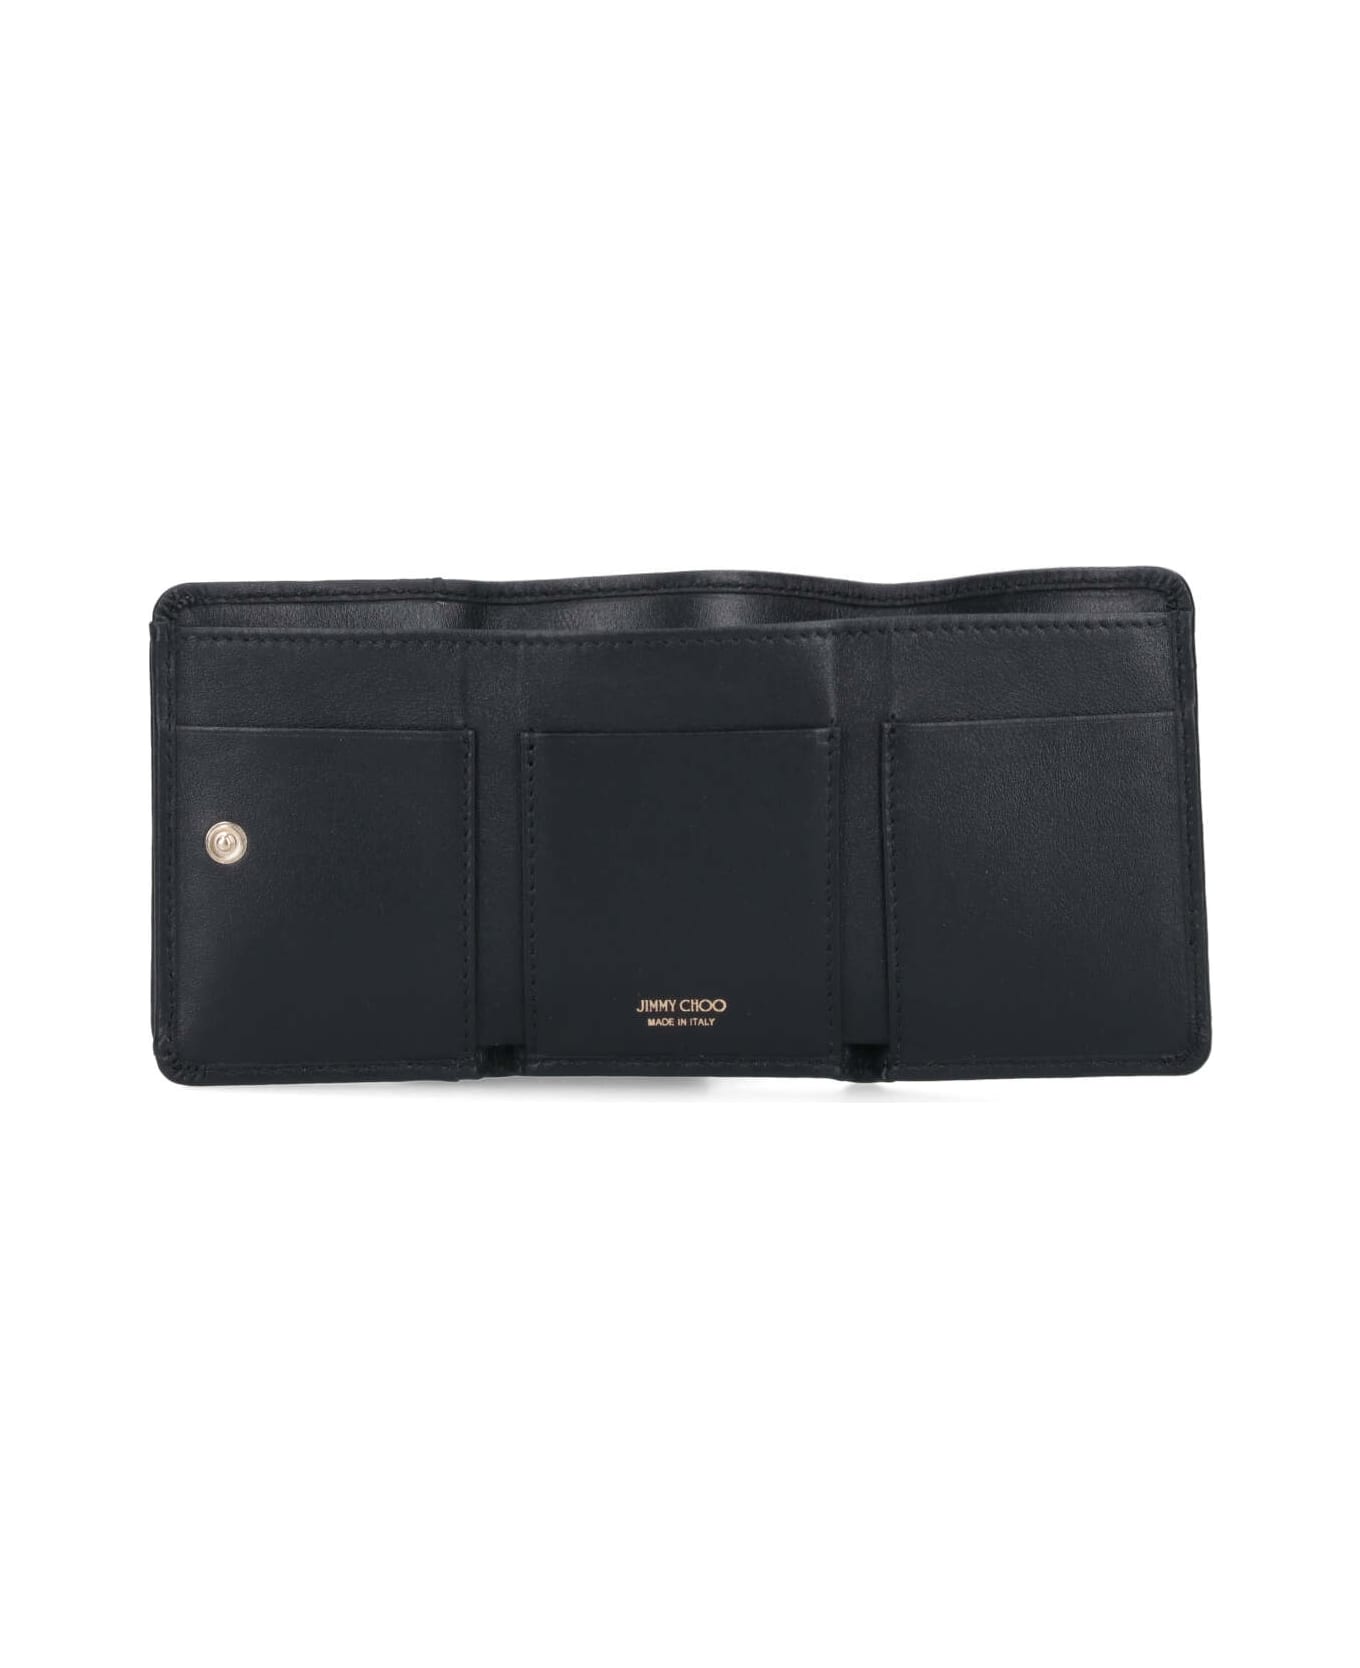 Jimmy Choo Studs Wallet - Black   財布